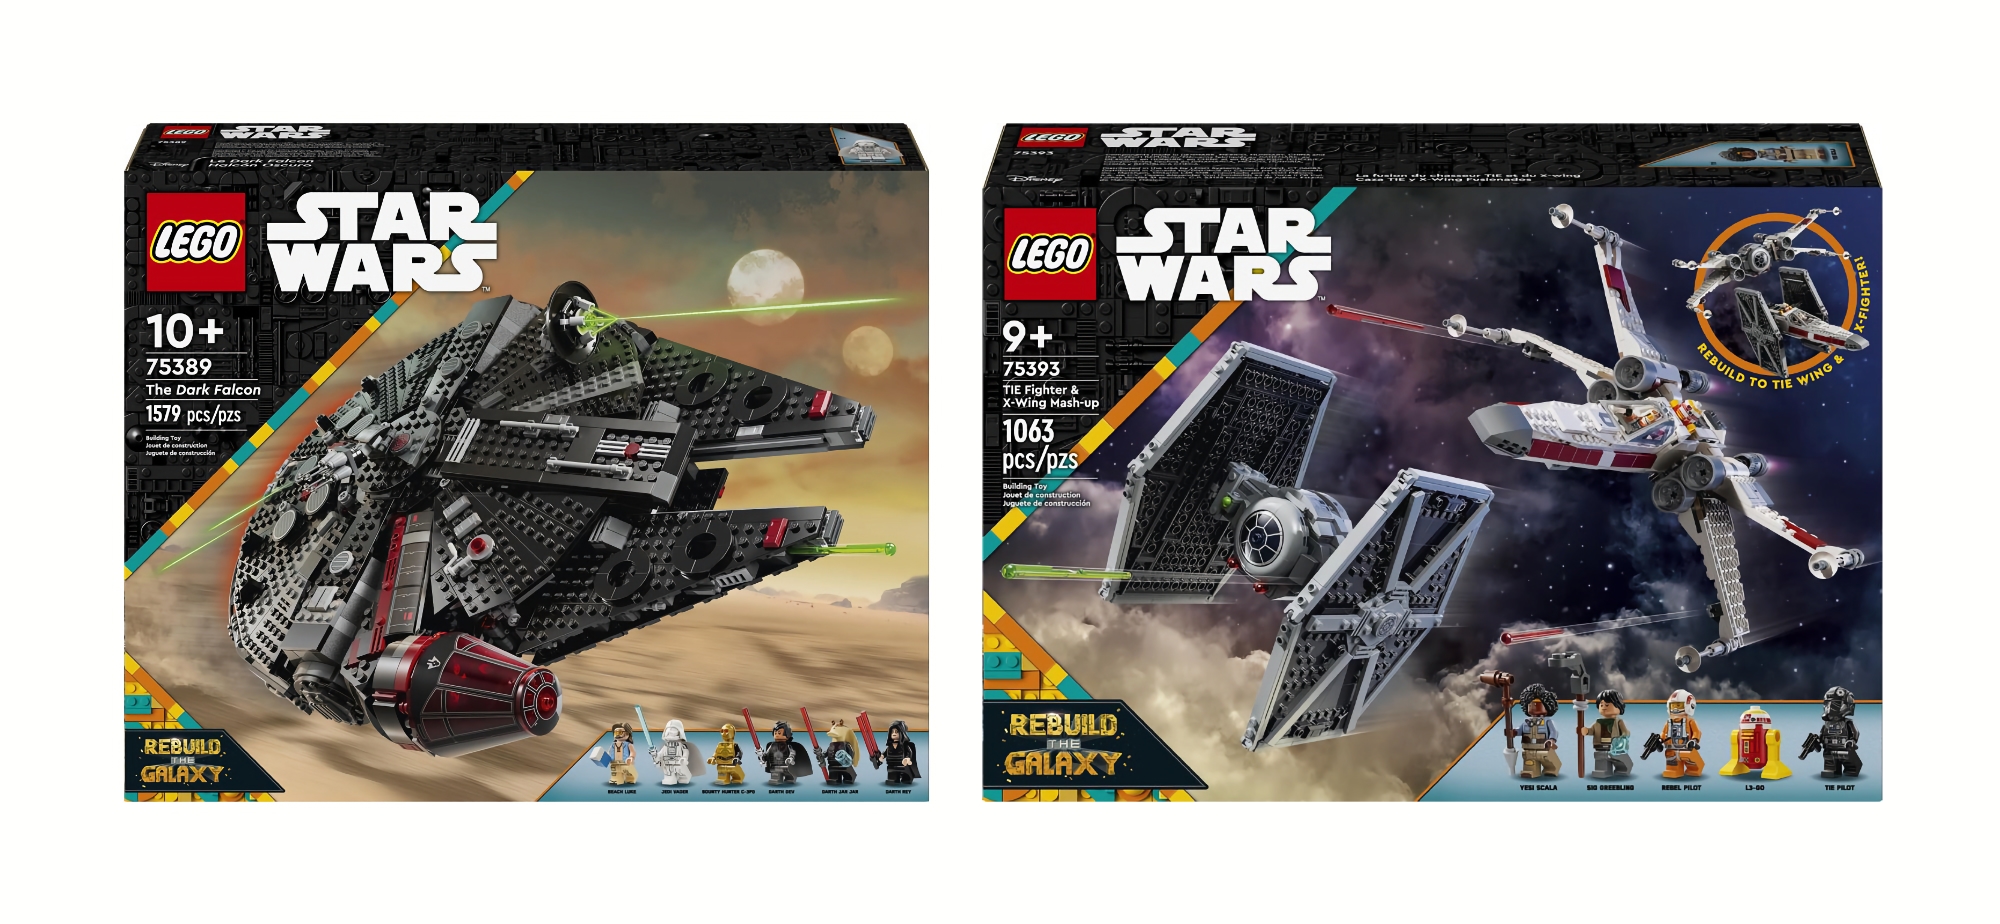 The Dark Falcon і TIE Fighter & X-Wing Mash-up: LEGO готує до релізу два набори Star Wars: Rebuild the Galaxy